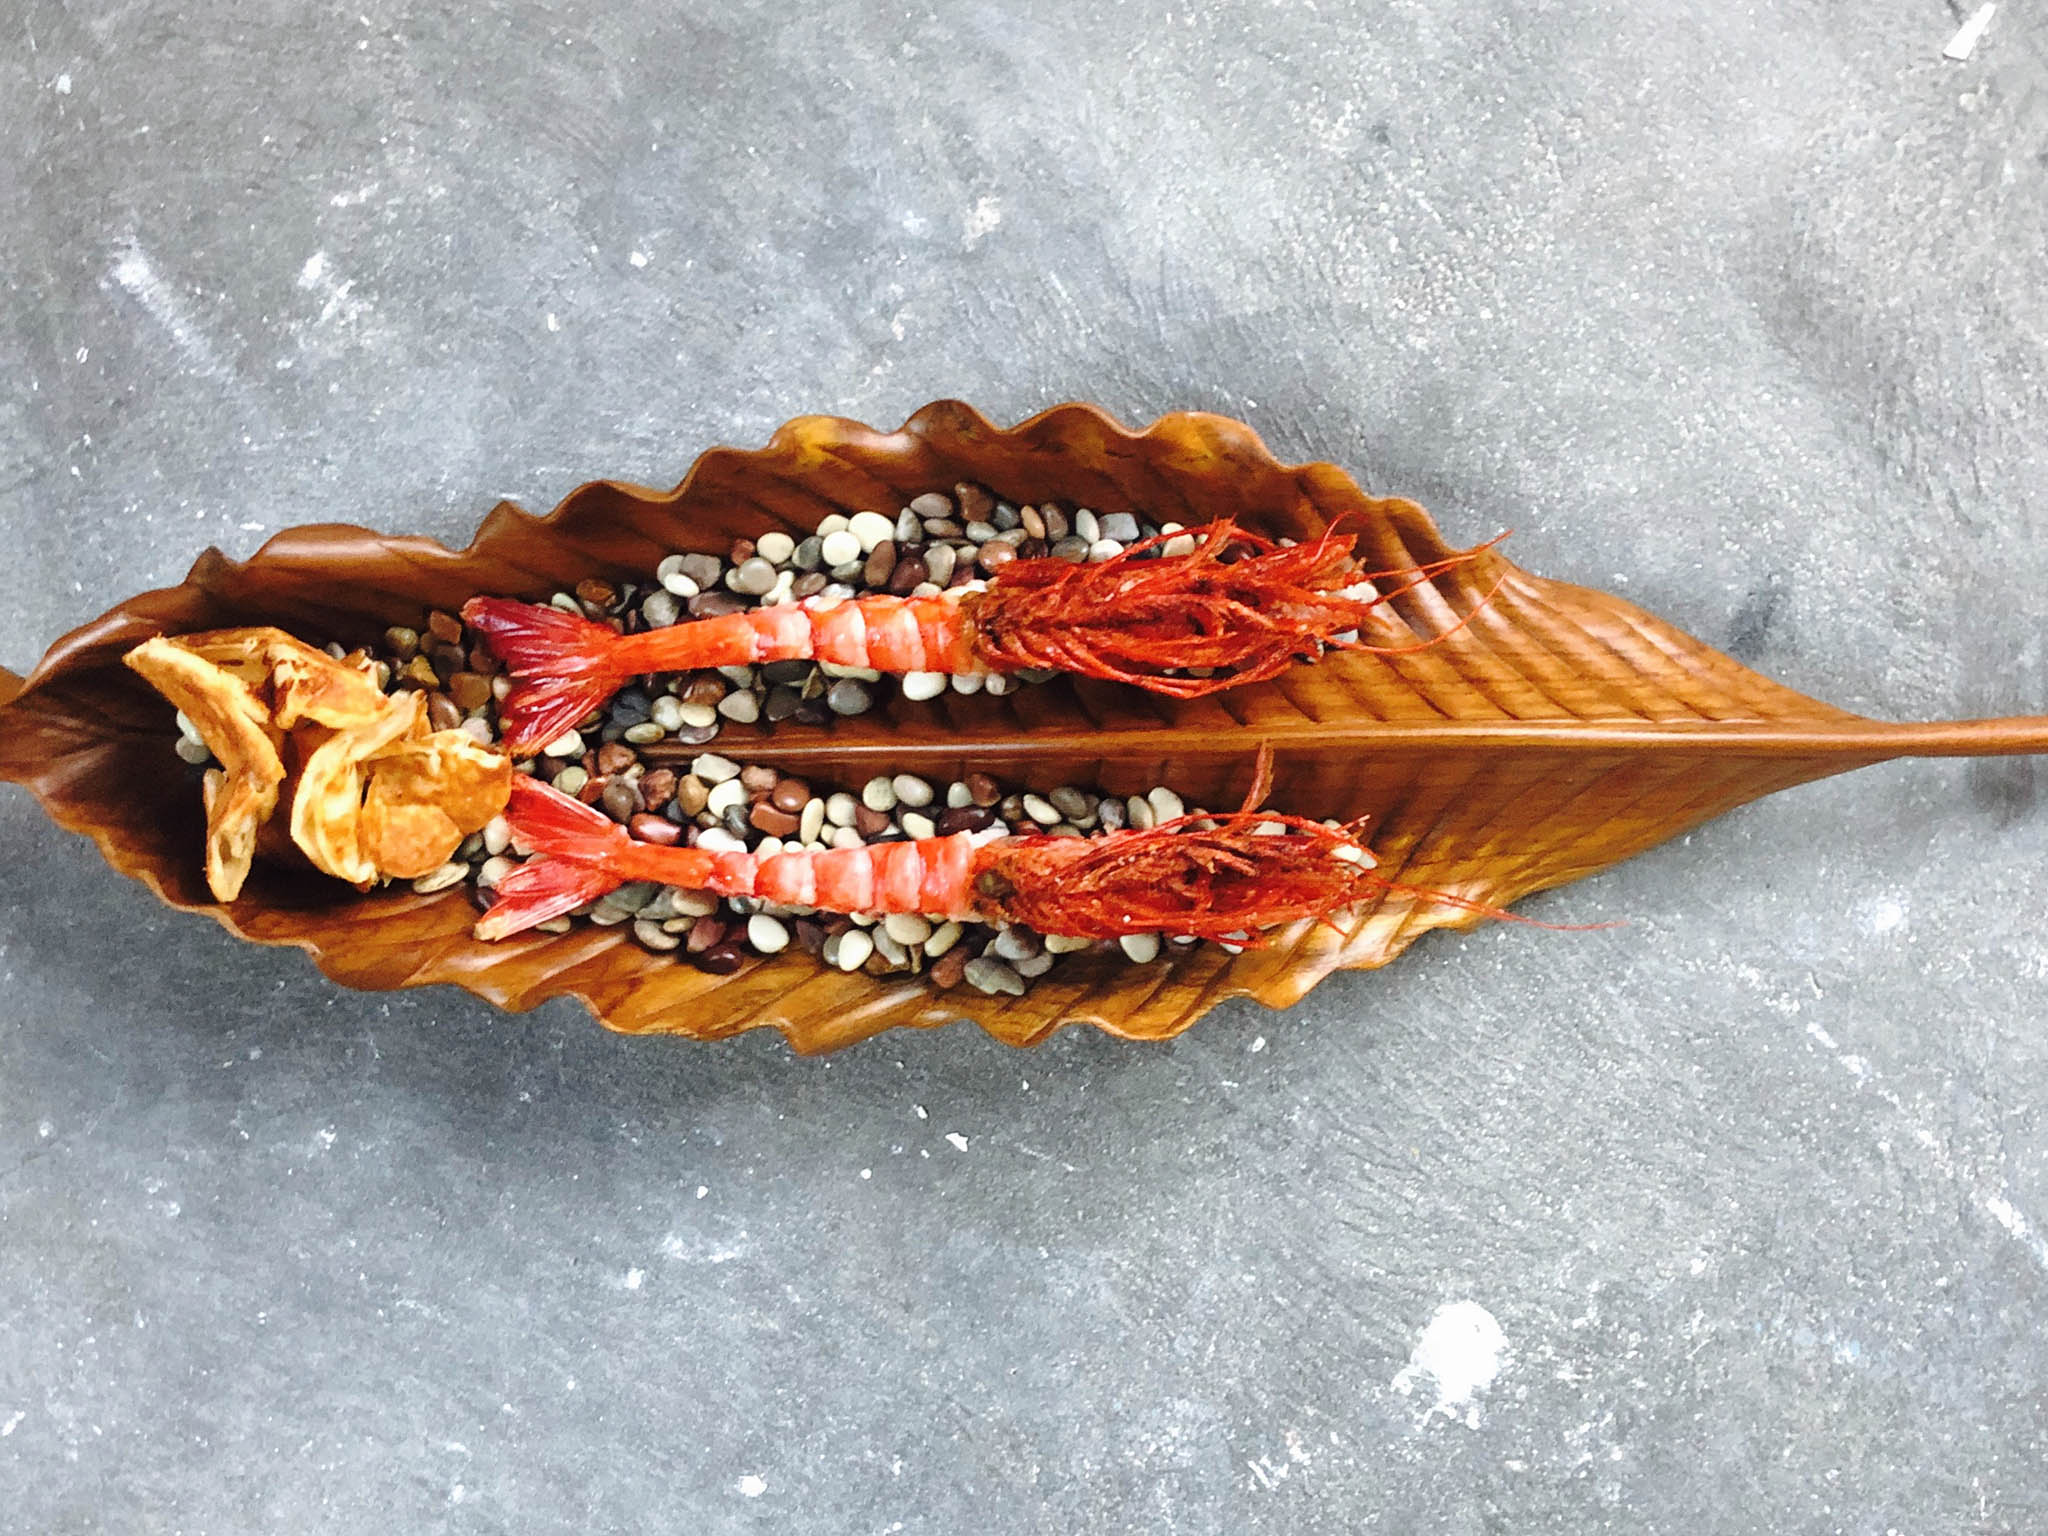 At his restaurant, Orana, one of Zonfrillo's dishes is this scarlett prawn roti